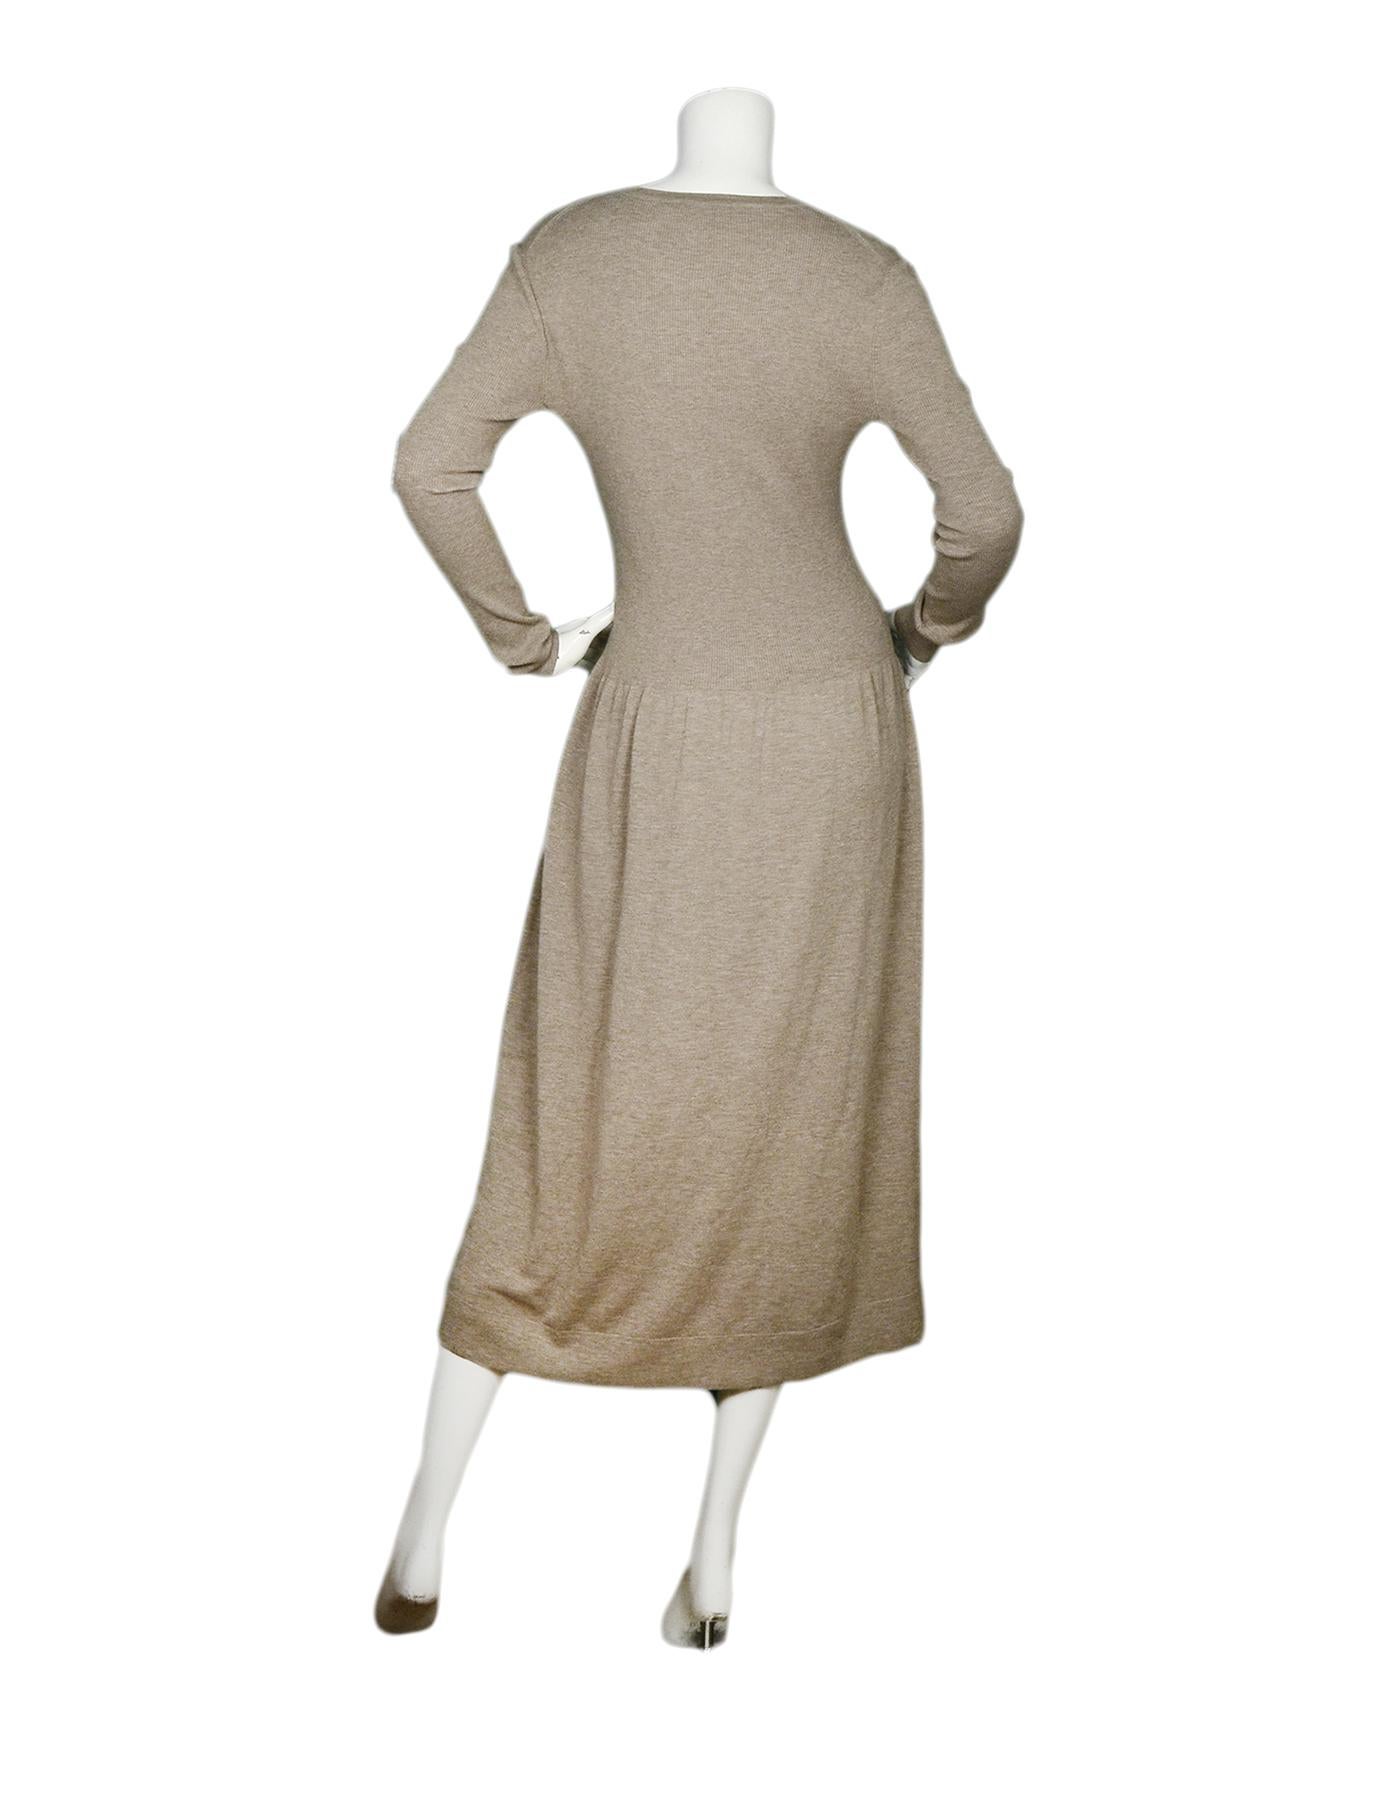 Brown Michael Kors NWT Tan/Taupe Long Sleeve Knit Sweater Midi Dress Sz S